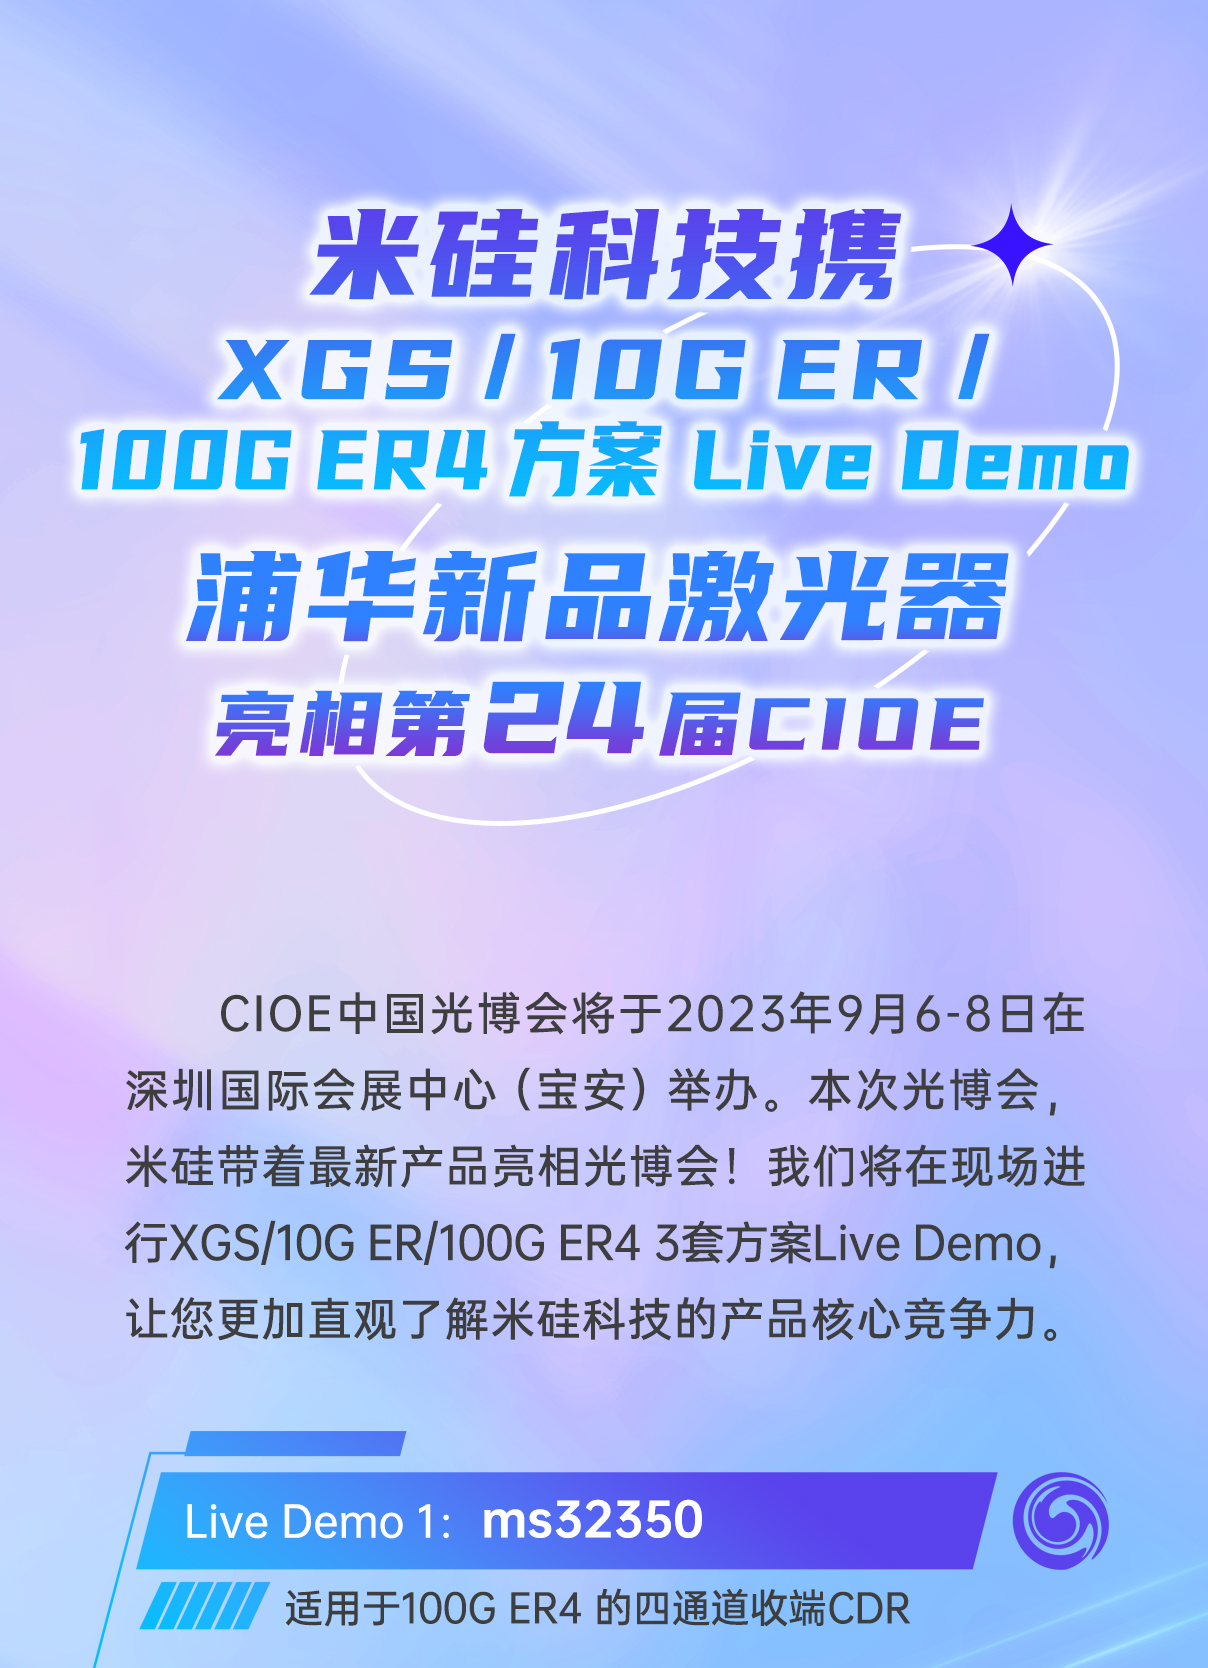 Minisilicon will live demo XGS/10G ER/100G ER4 Solution at 24th CIOE and Puhua new Gen 980nm Pump La